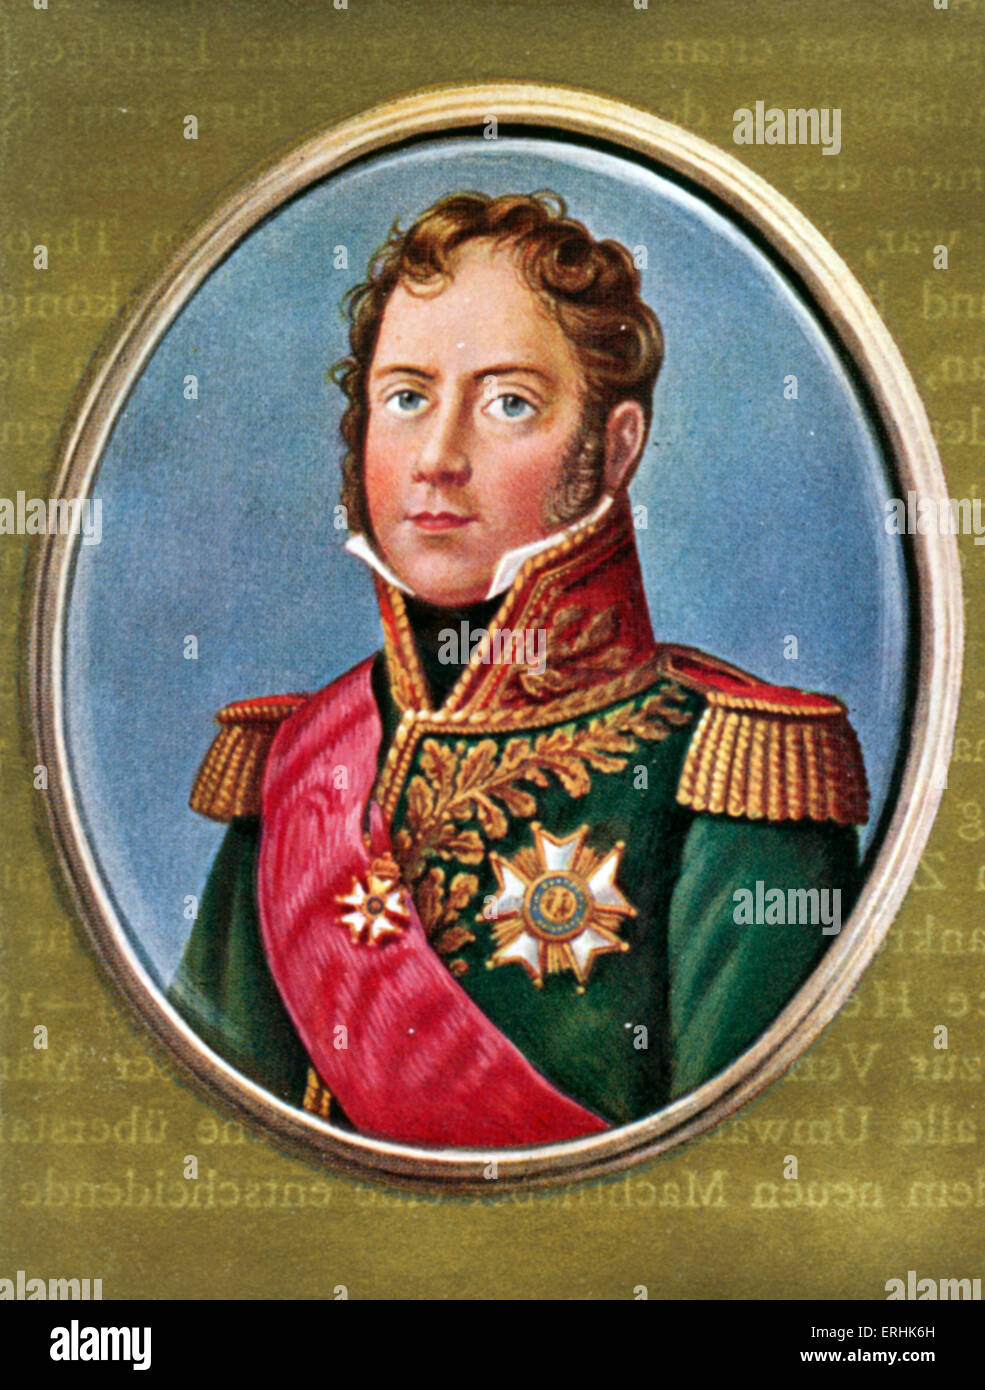 Michel Ney, Prince de la Moskowa, Duke of Elchingen. Portrait of the marshal of the French army. 10 January 1769 – 7 December Stock Photo